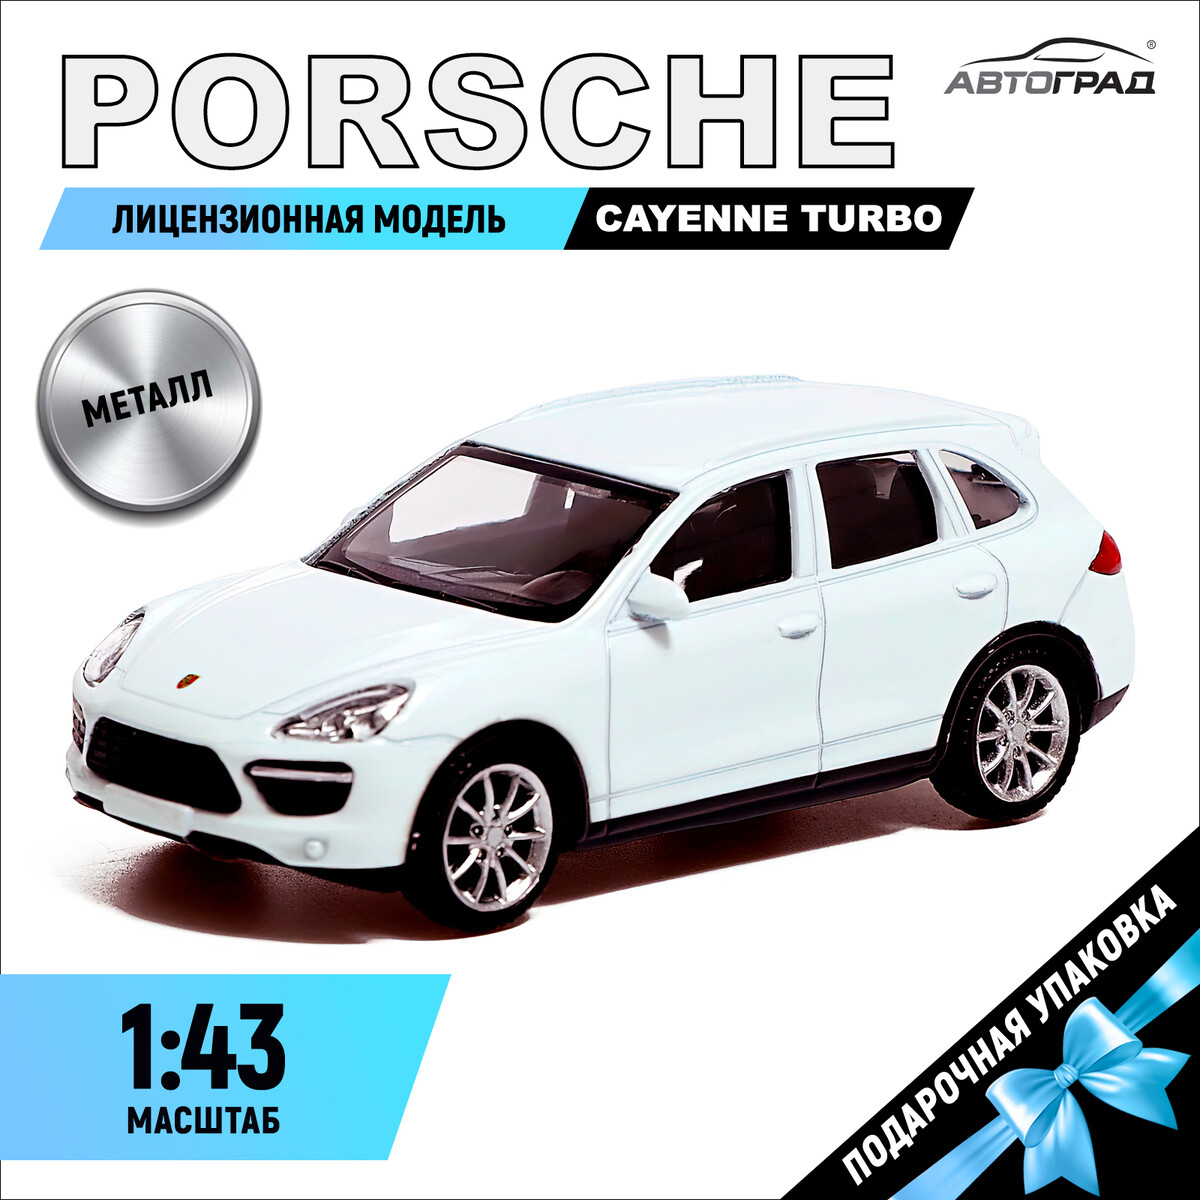 Машина металлическая porsche cayenne turbo, 1:43, цвет белый машина металлическая автоград porsche cayenne turbo 1 43 белый 4843676